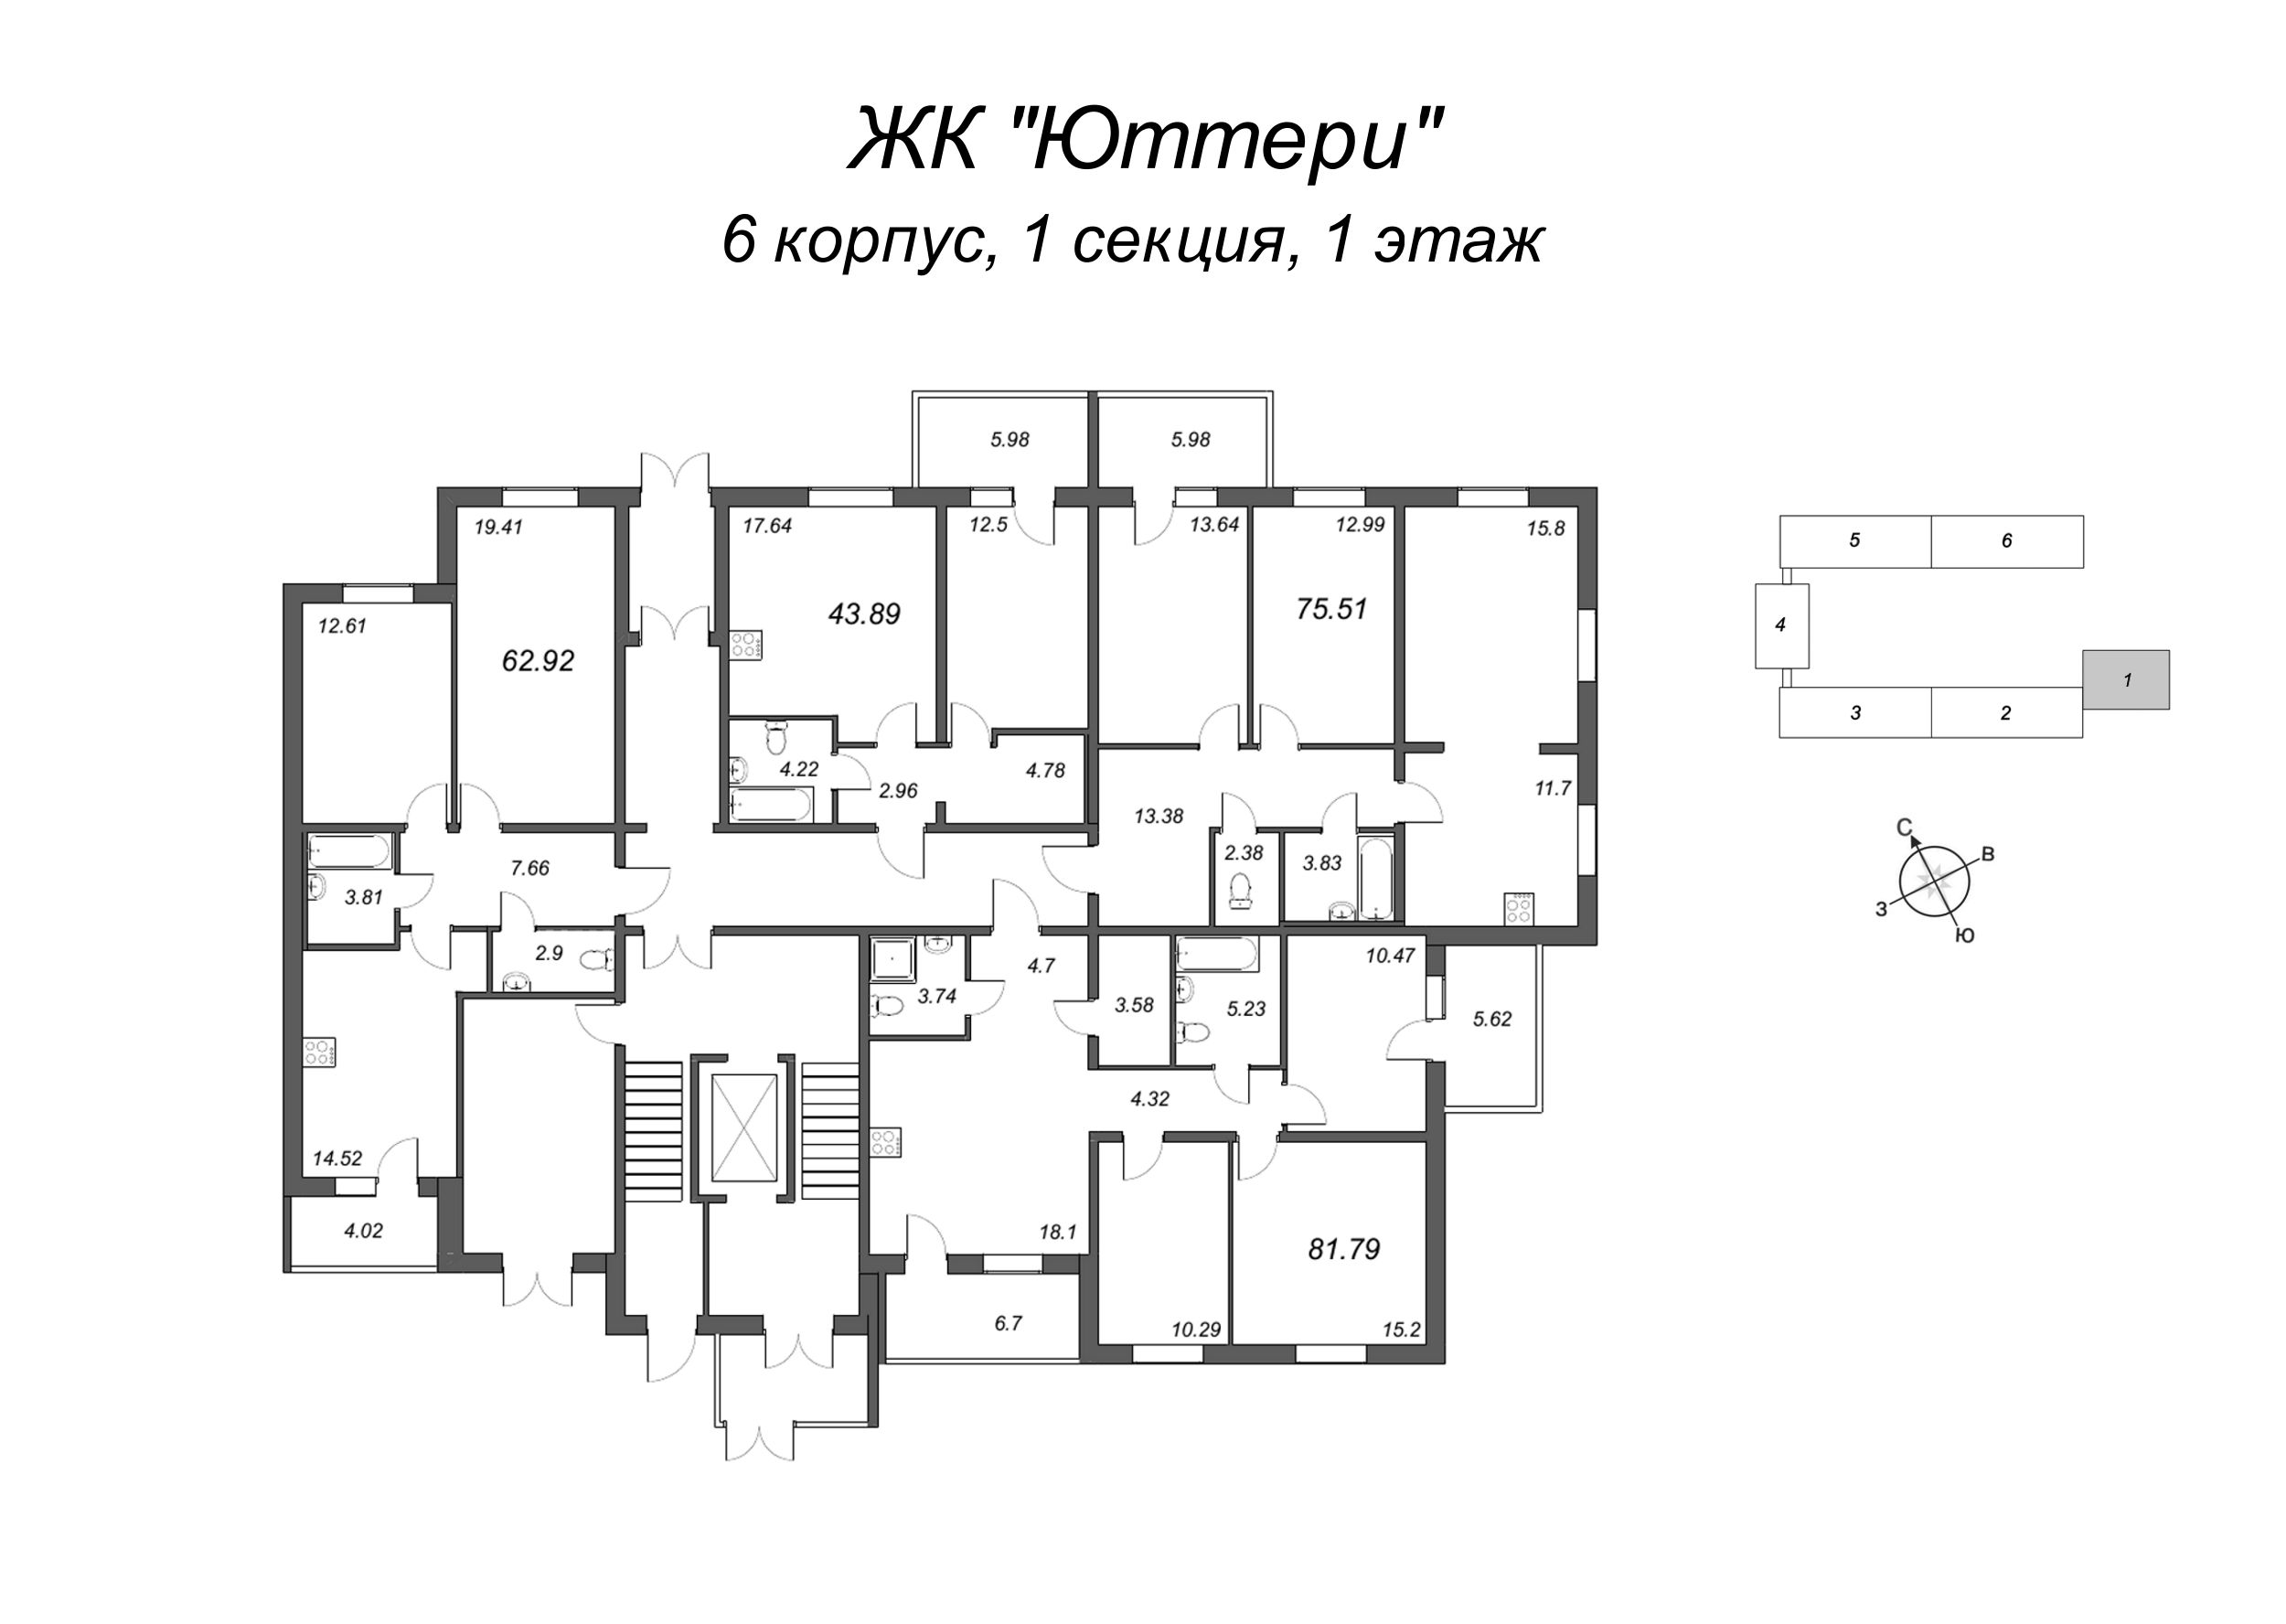 4-комнатная (Евро) квартира, 75.63 м² - планировка этажа